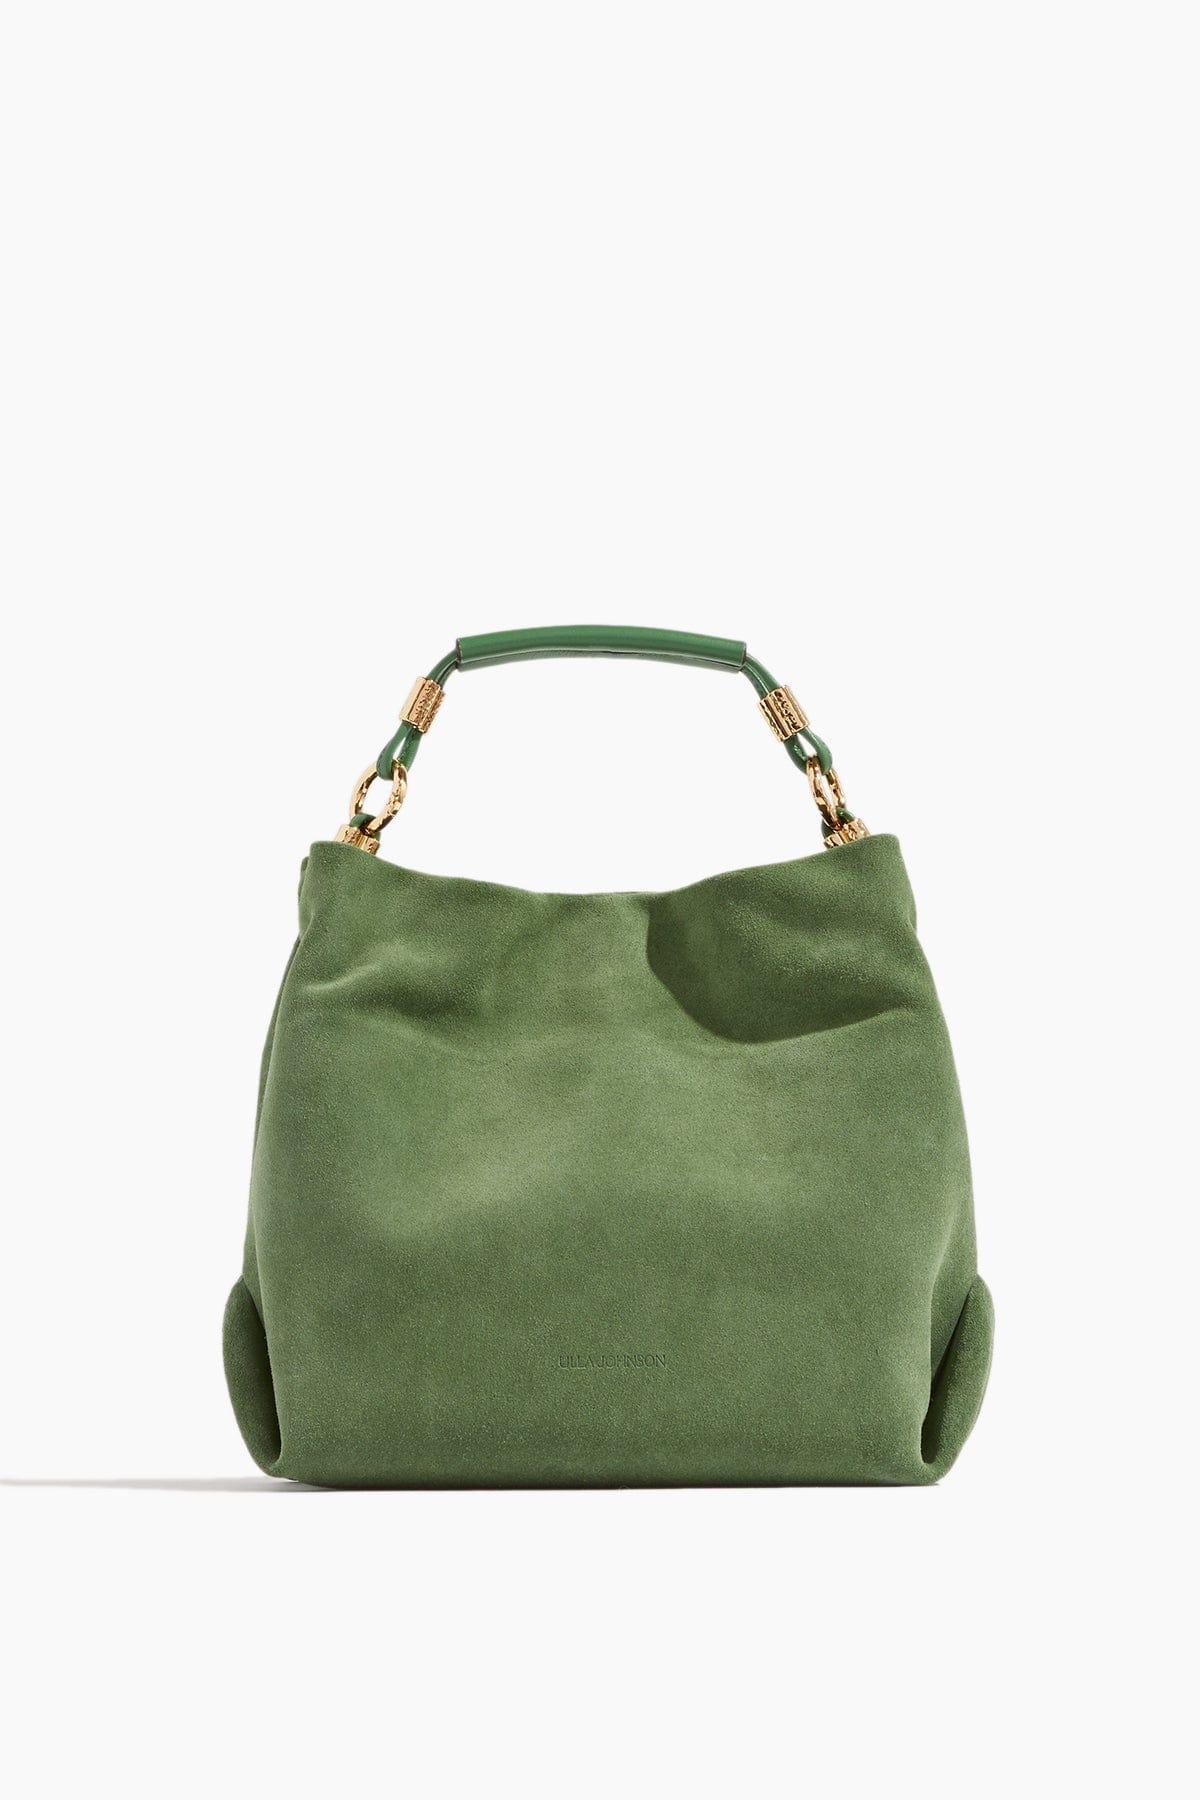 Ulla Johnson Women's Remy Mini Handbag in Green